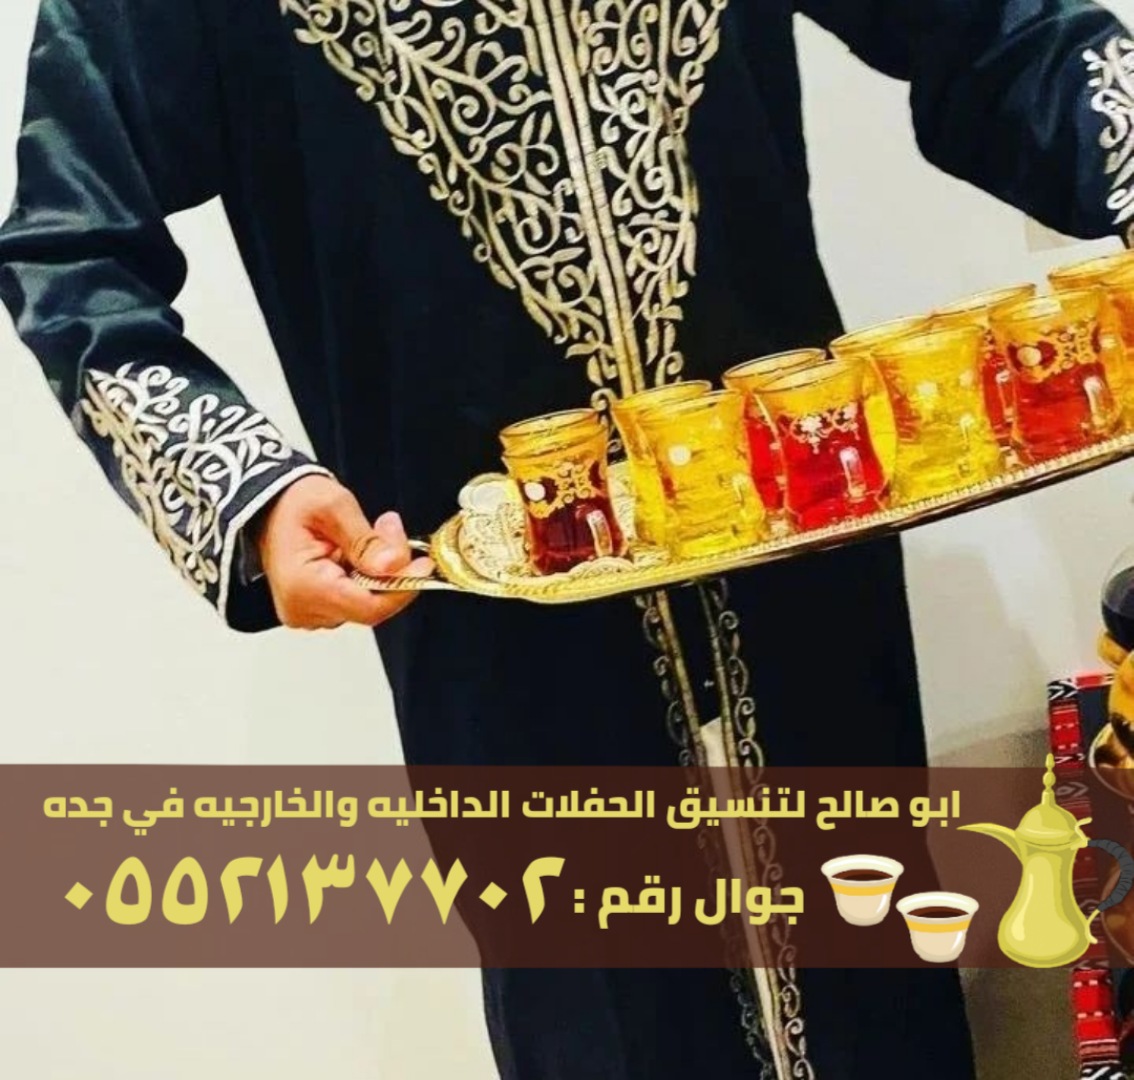 مباشرات و صبابين قهوة في جدة, 0552137702 P_2600j9m7u8